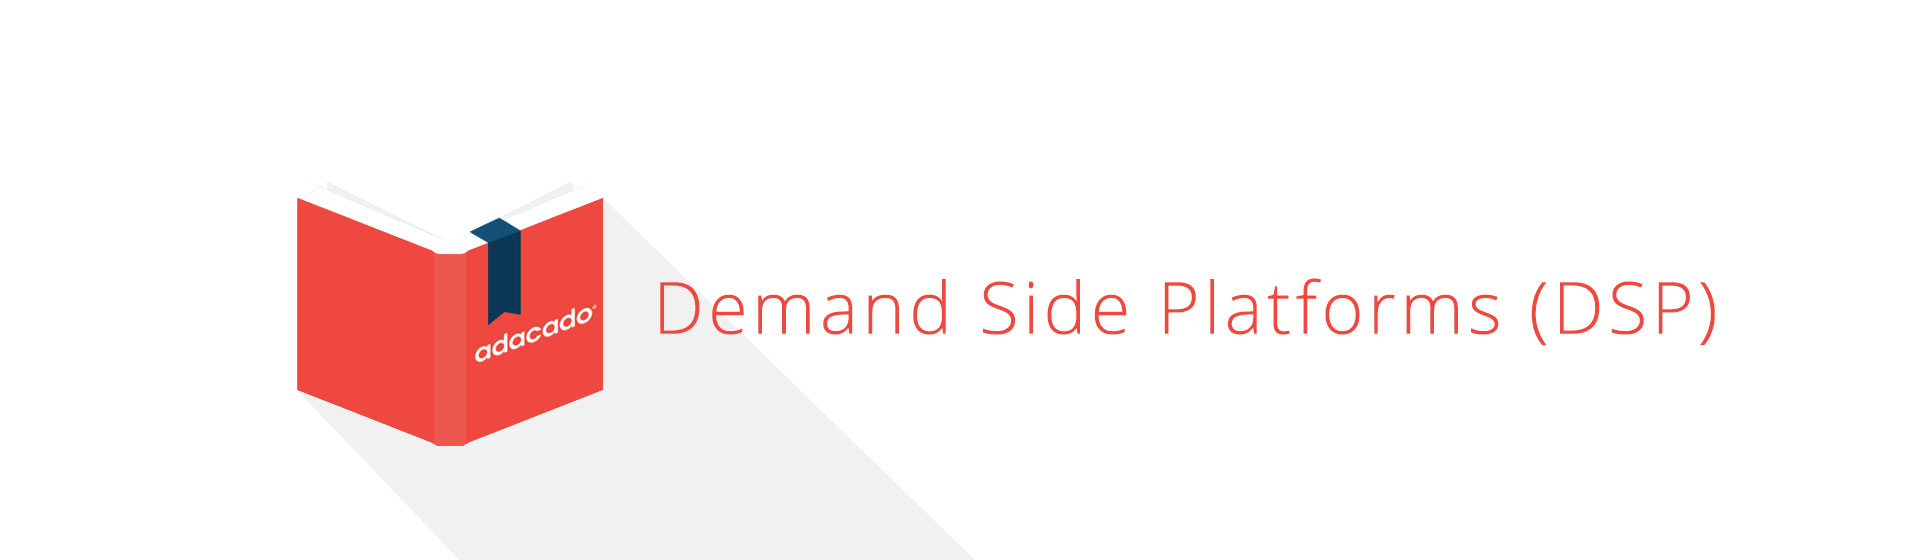 demand side platforms